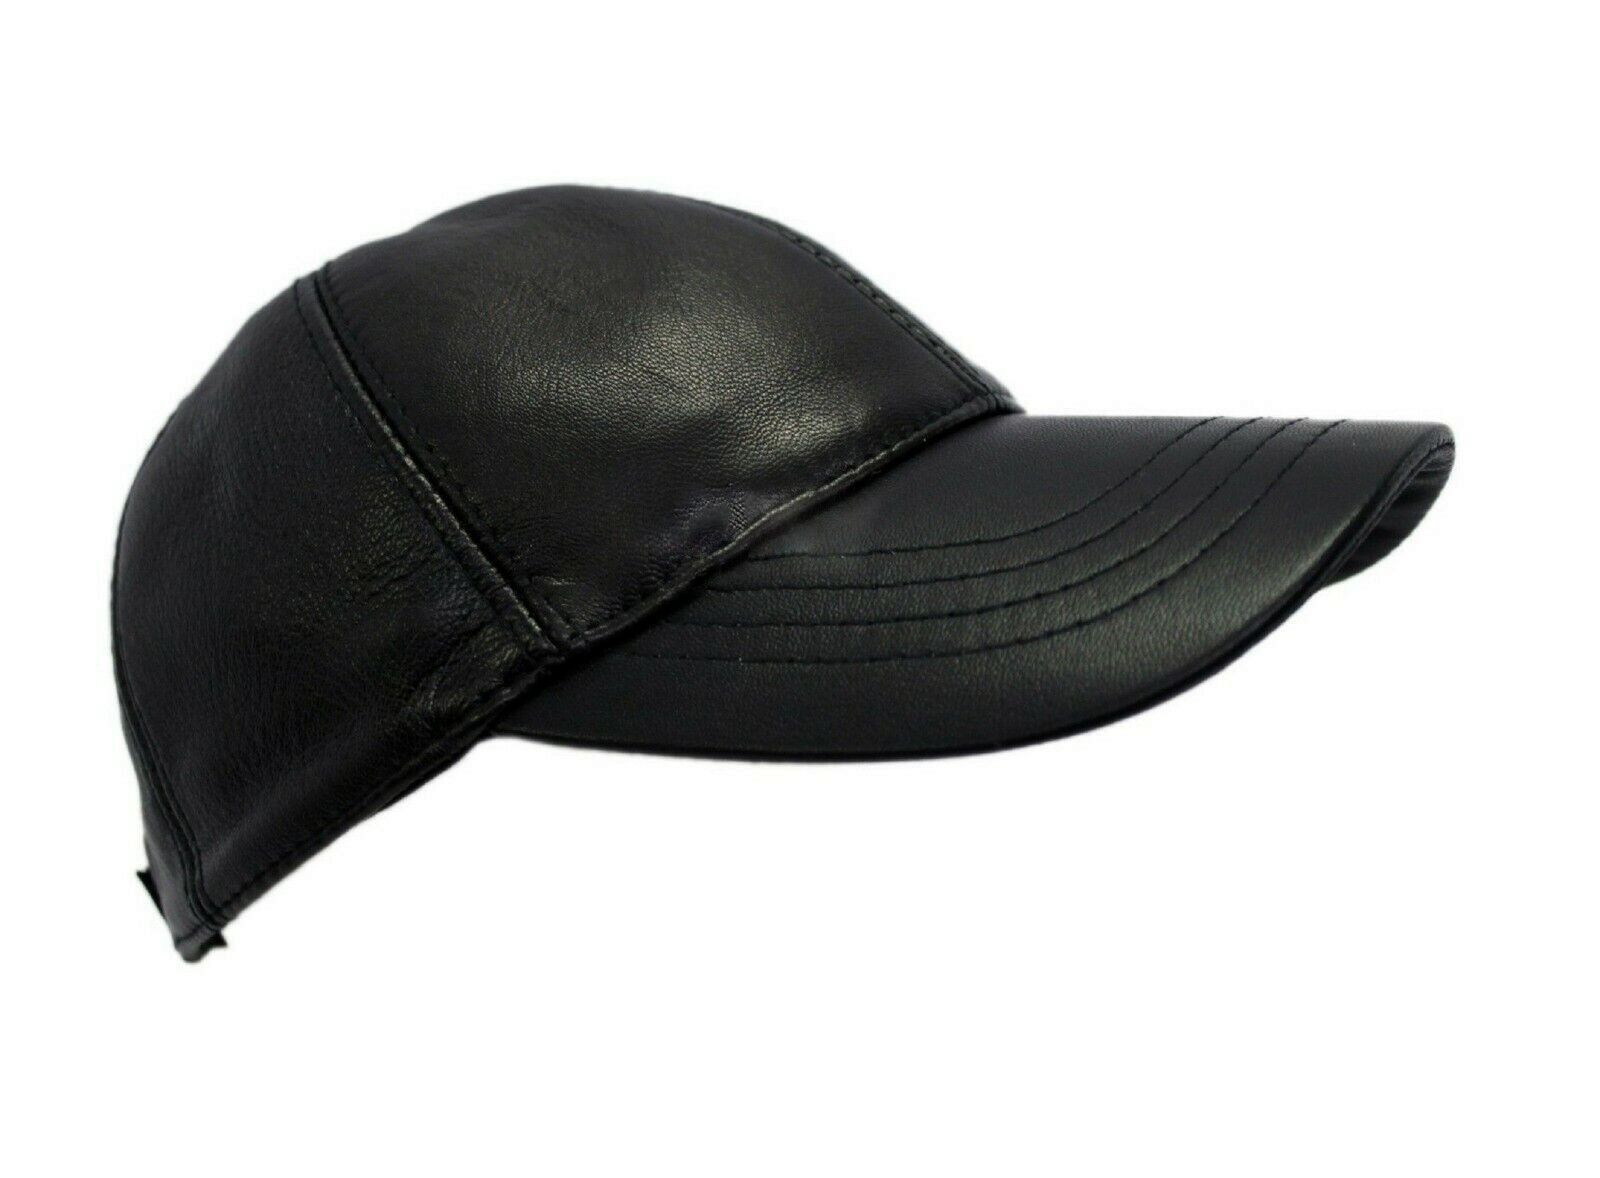 Leather Baseball Cap Black Adjustable Size